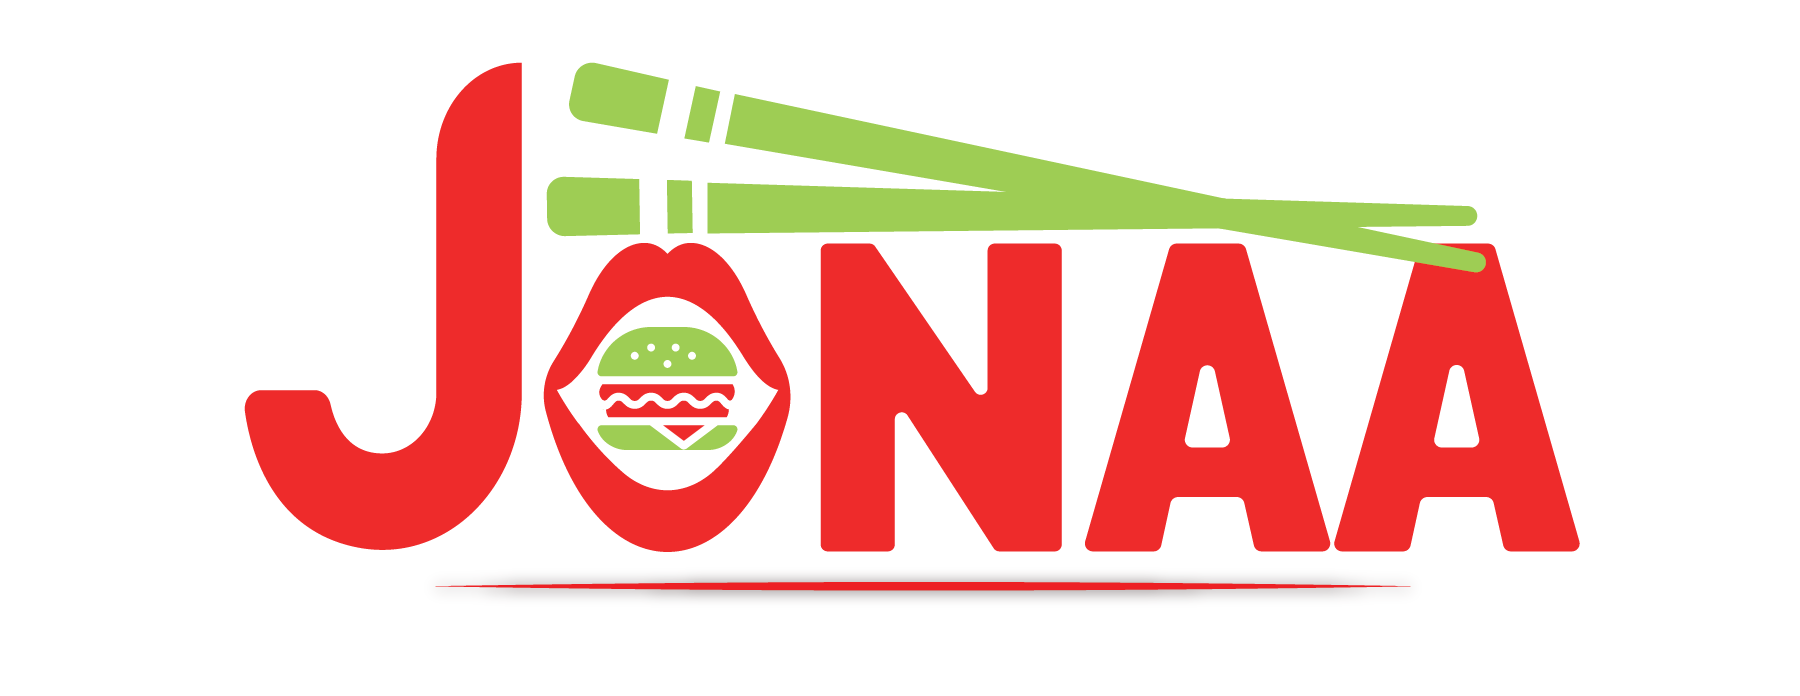 Jonaa Final Logo-01